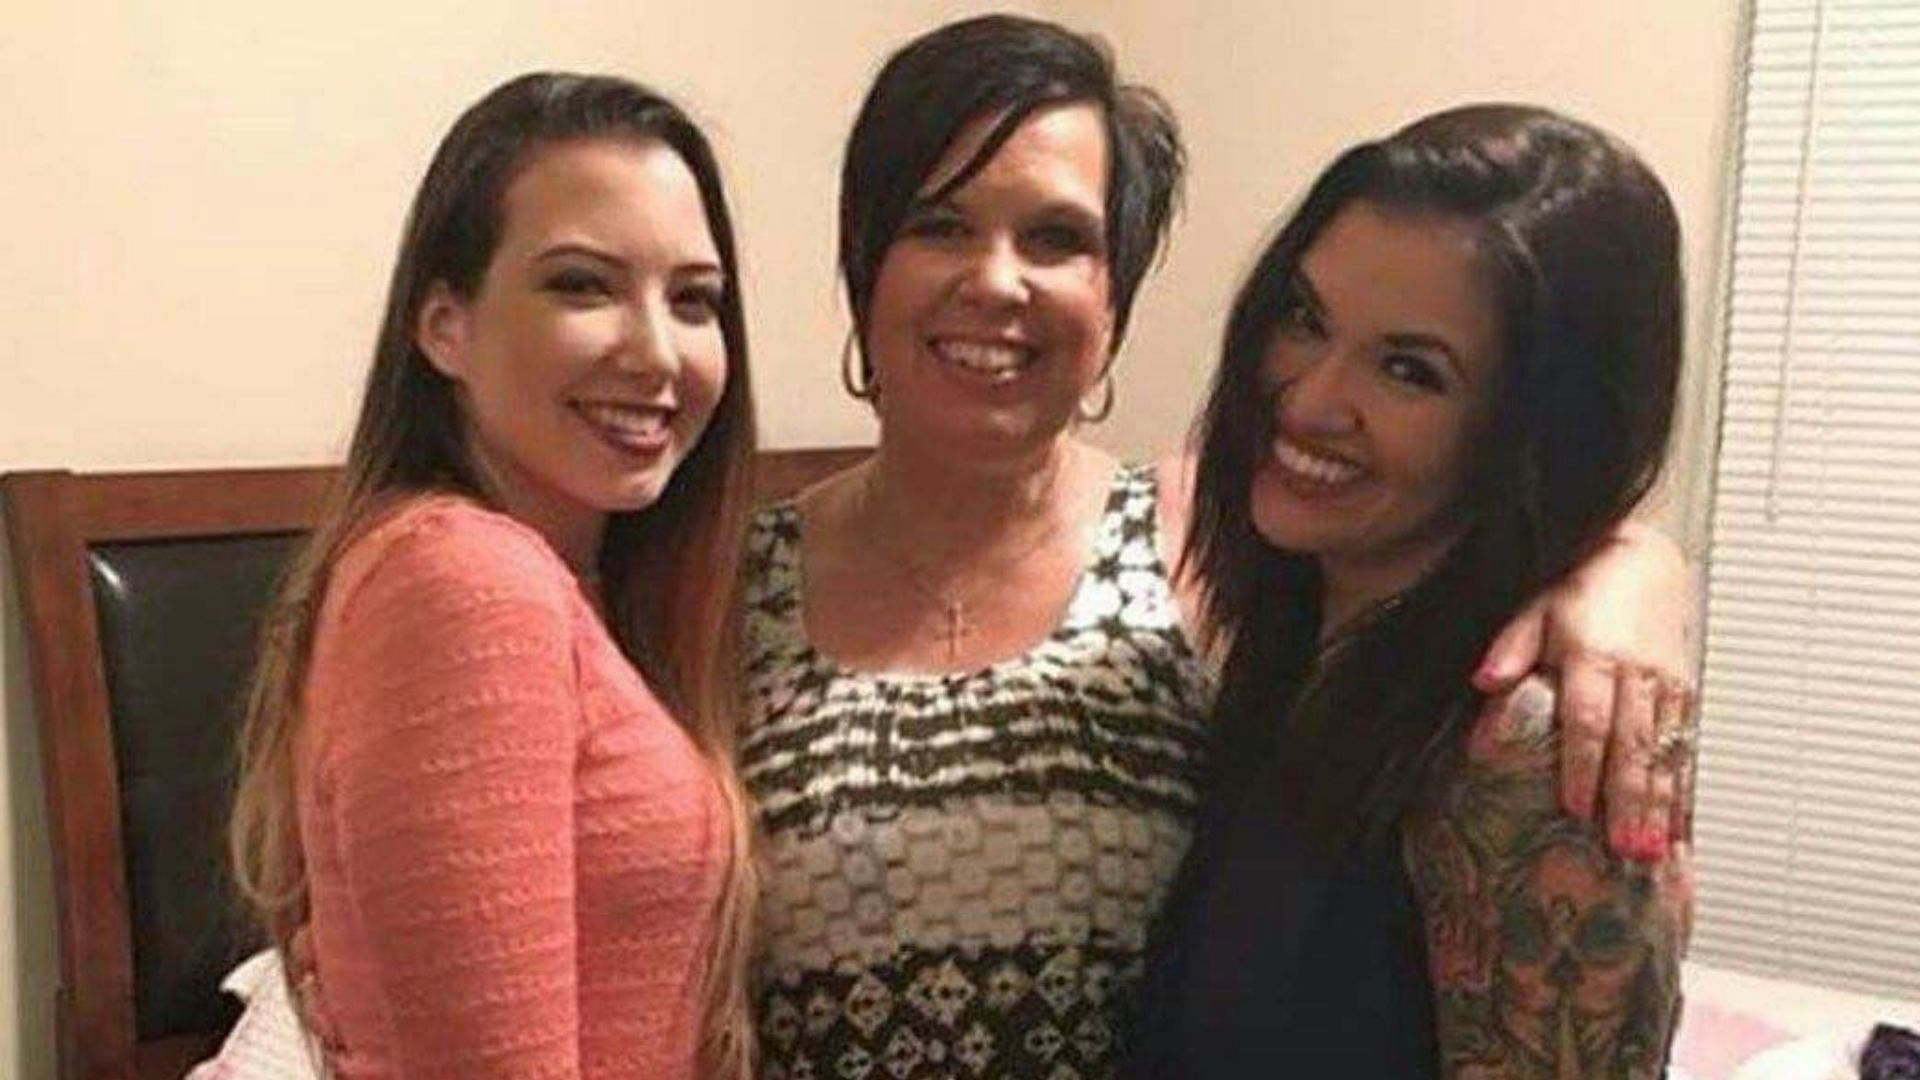 Eddie Guerreros Daughter Kaylie Speaks Out On Sisters Sexual Assault Allegations Against 